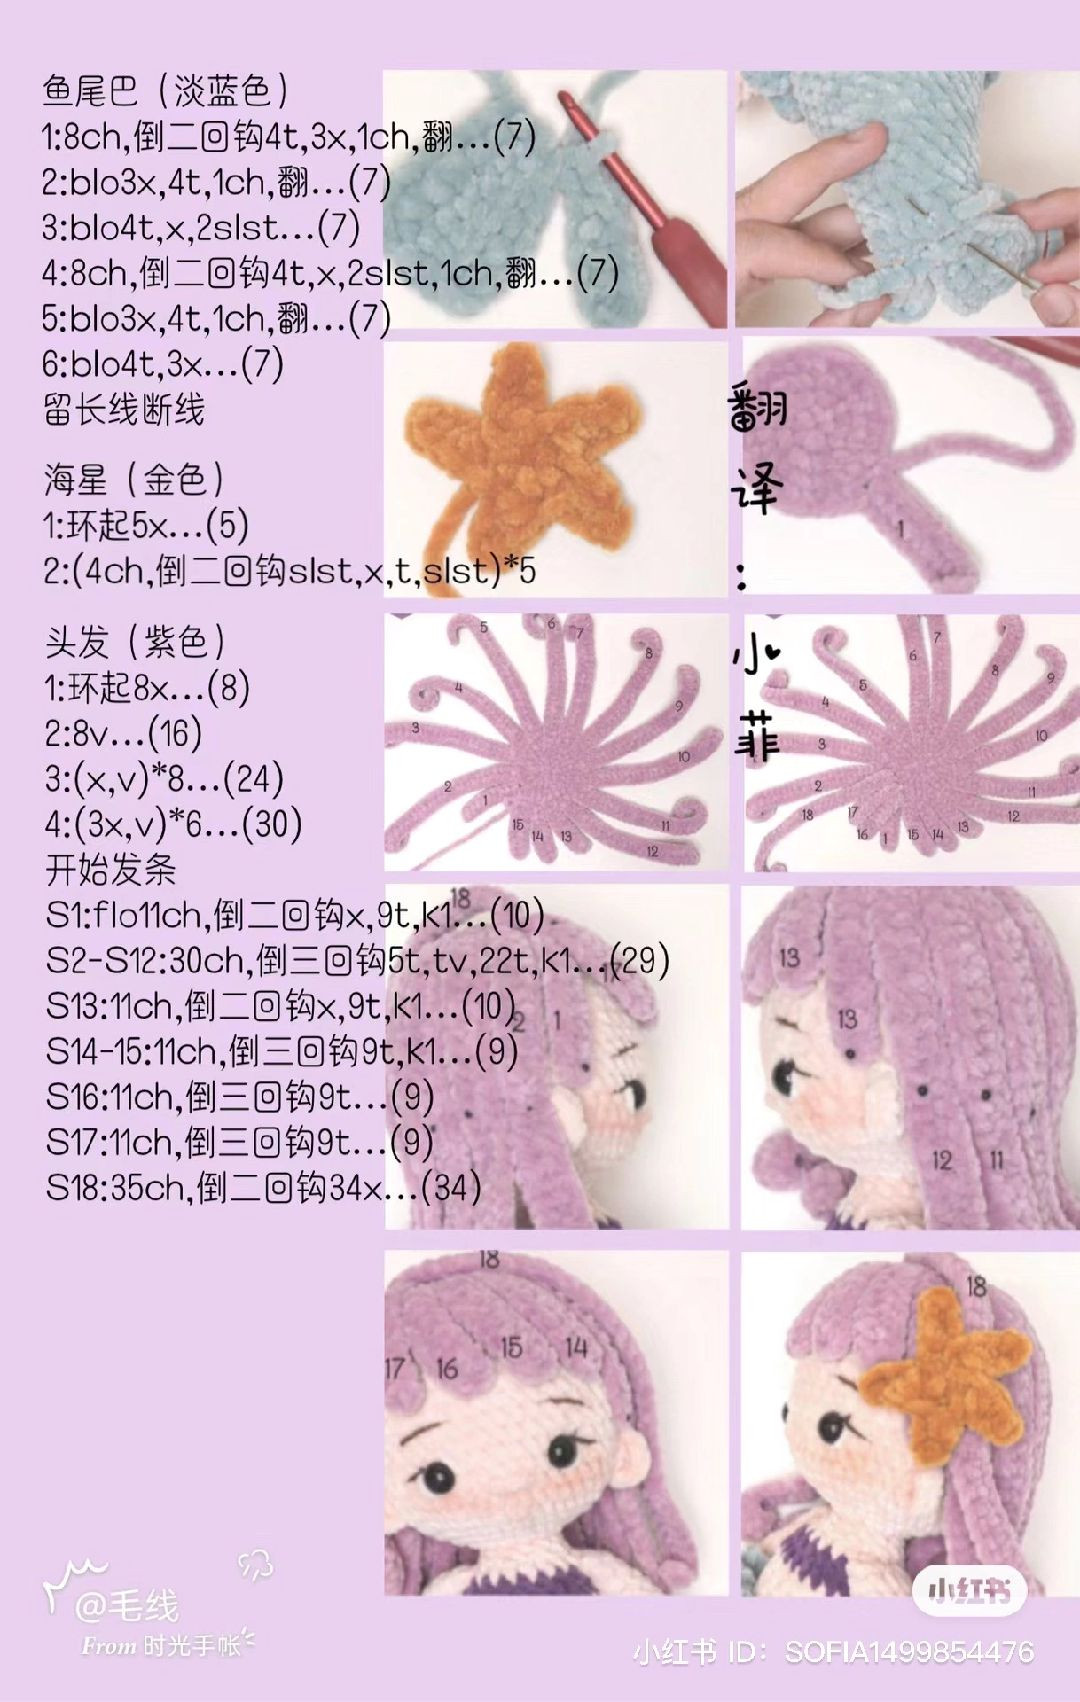 mermaid baby crochet pattern